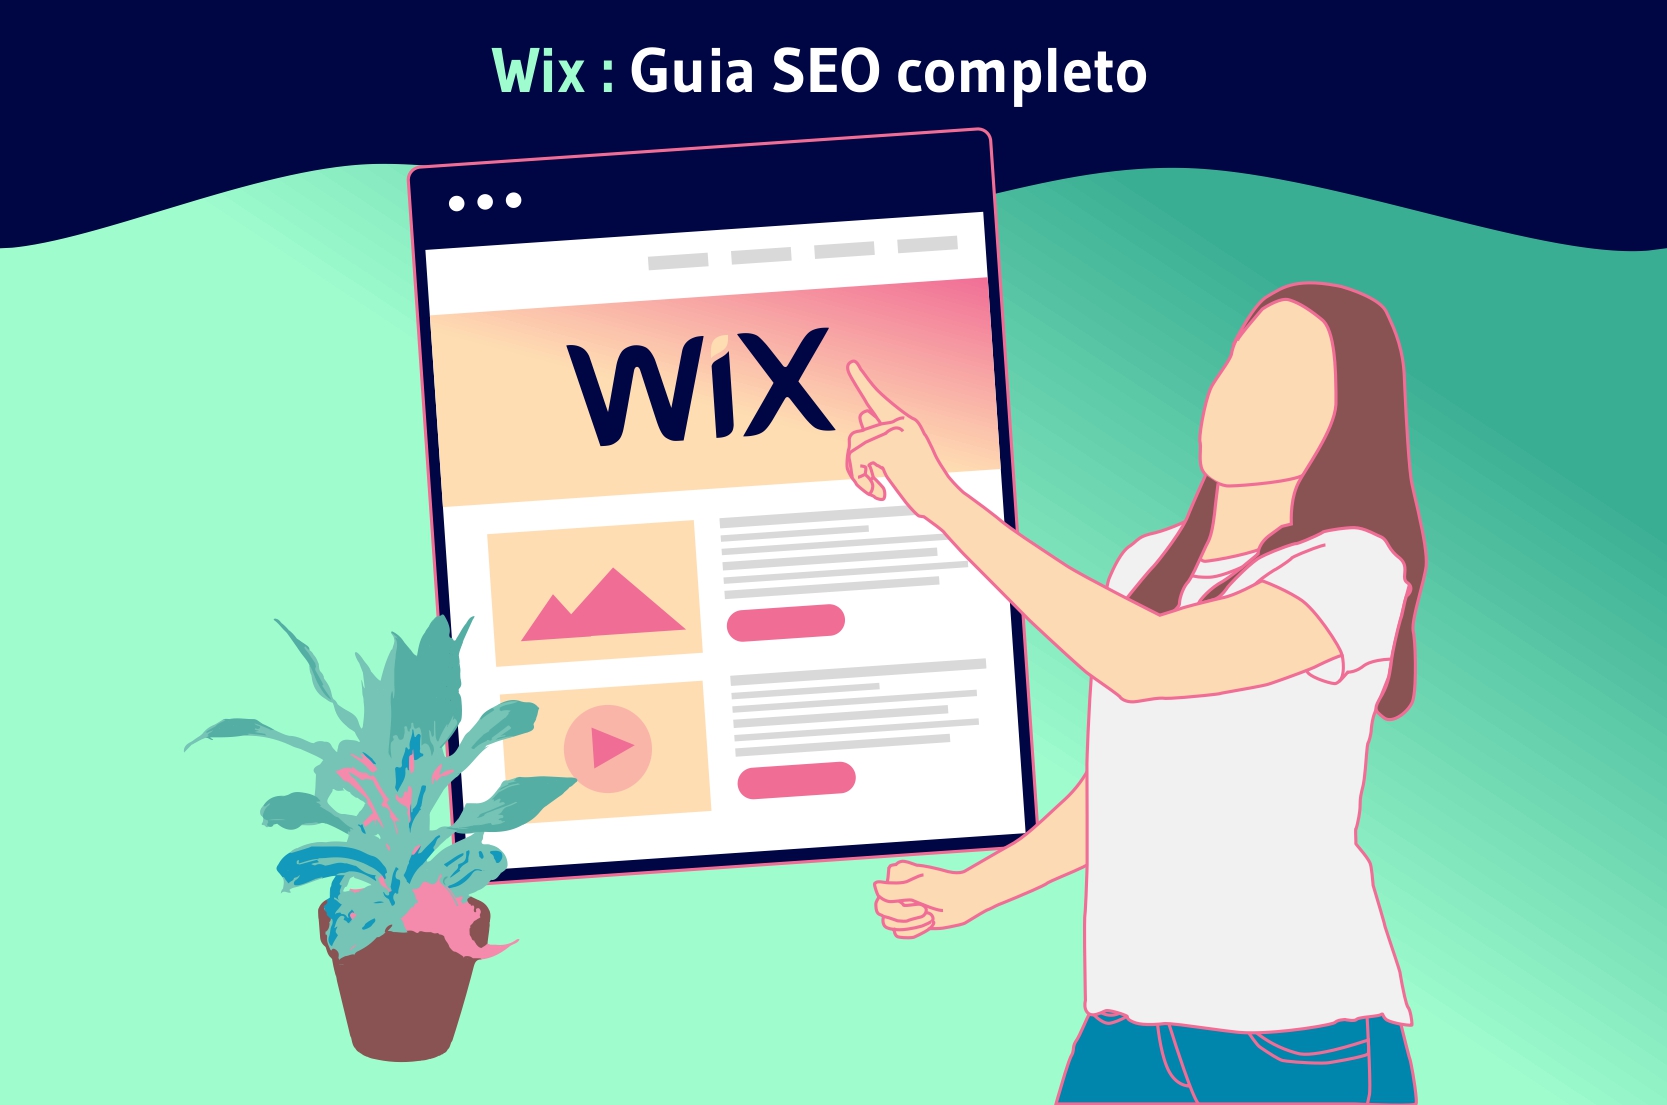 Wix : Guia SEO completo